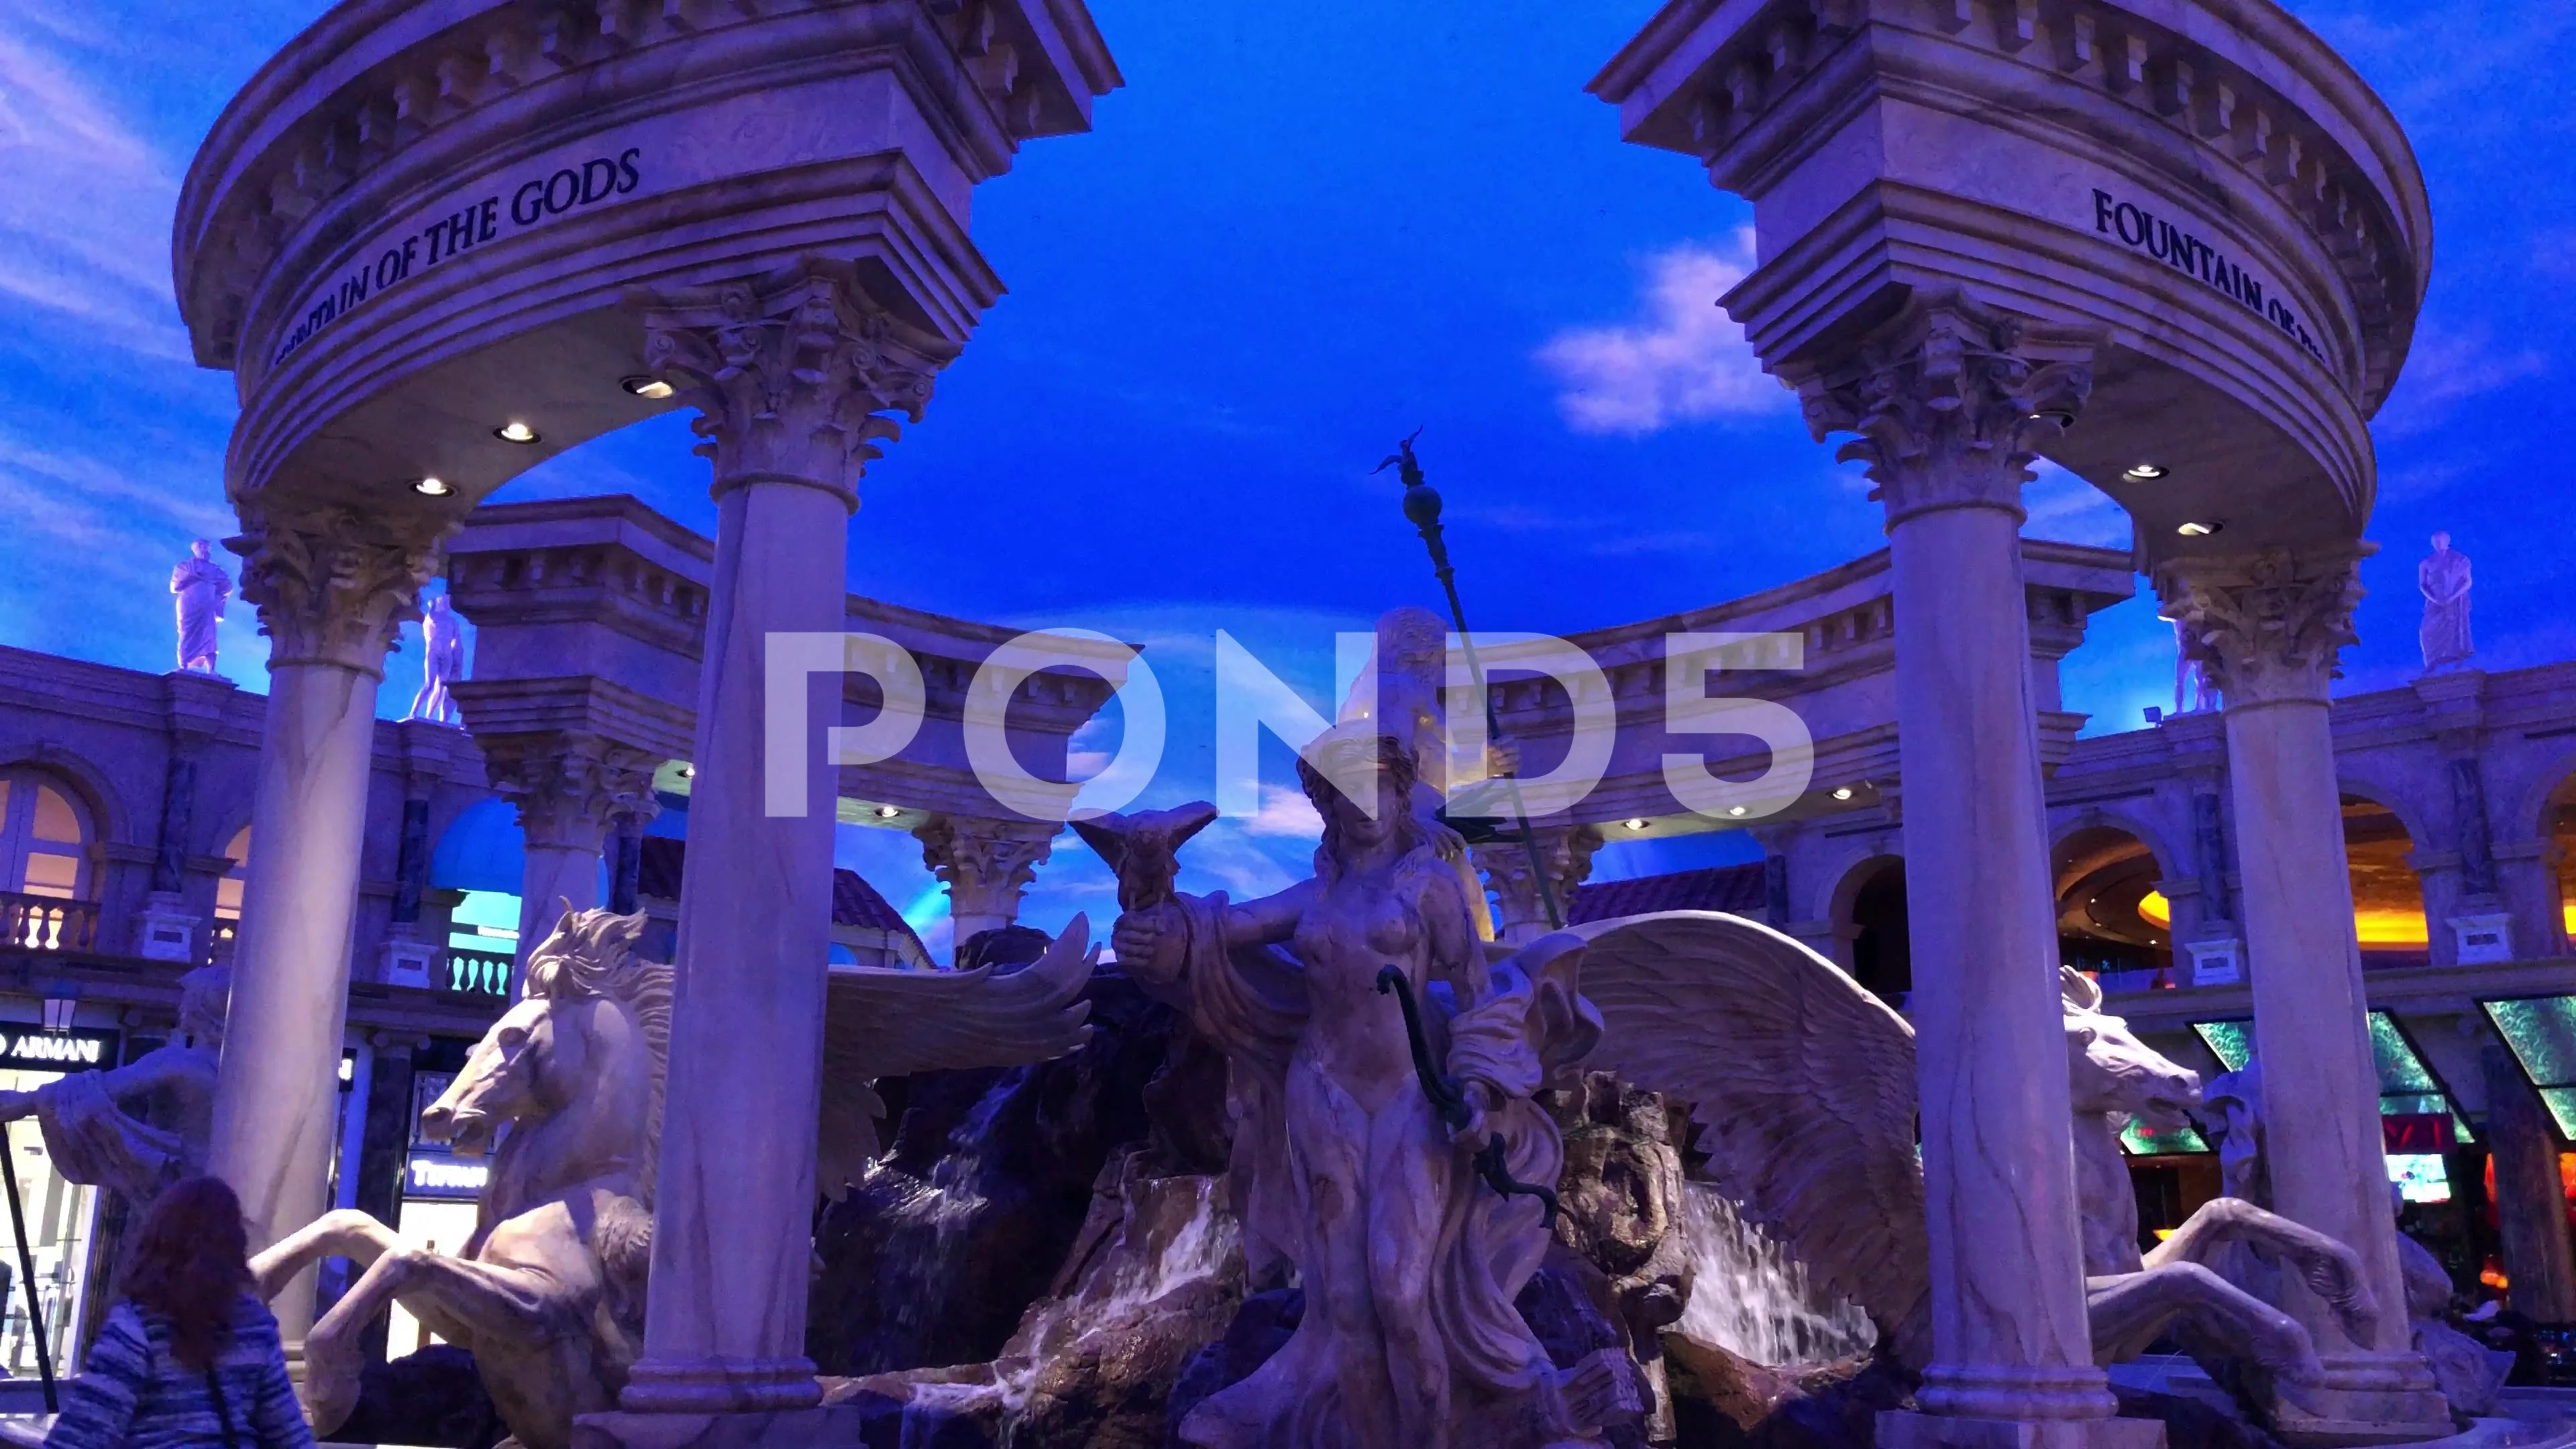 fountain of the gods caesars palace